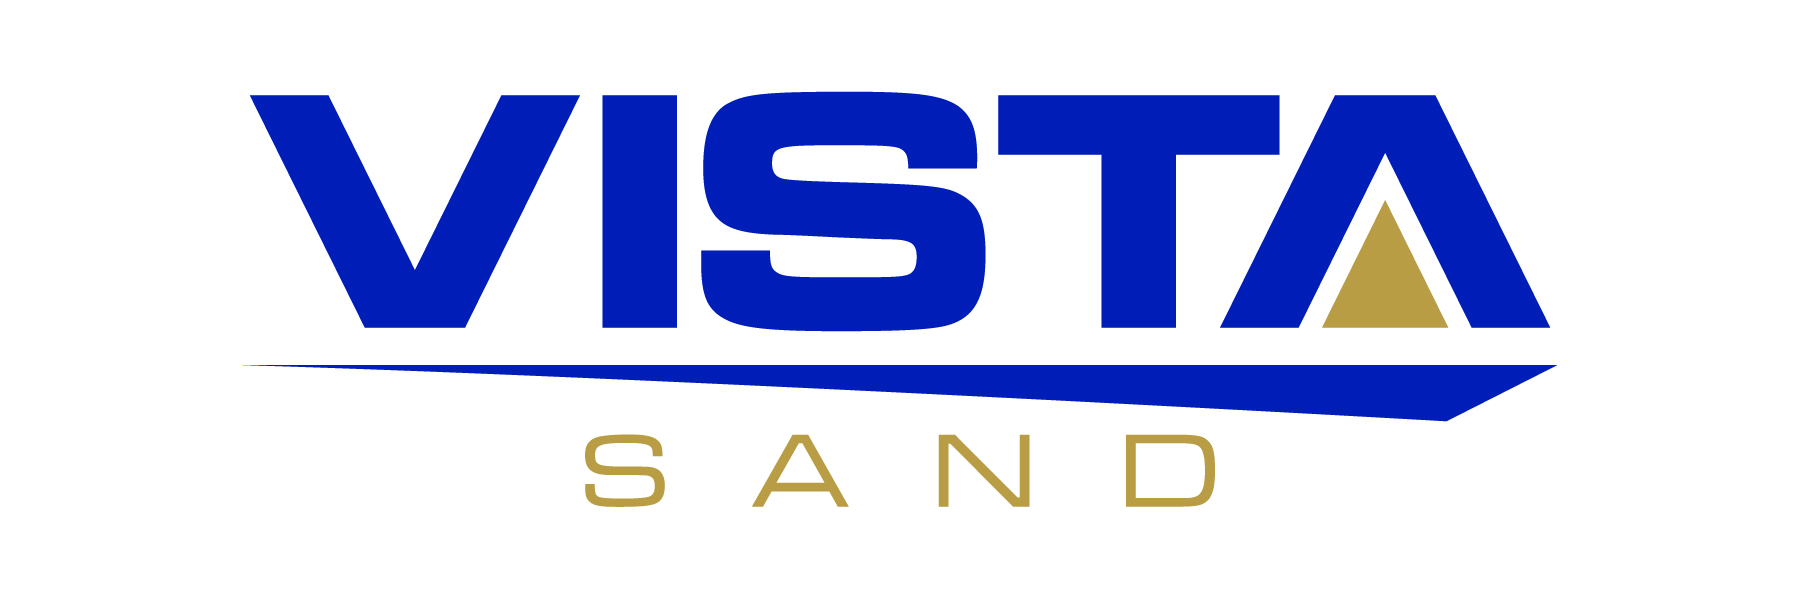 VistaSand Logo FINAL.jpg